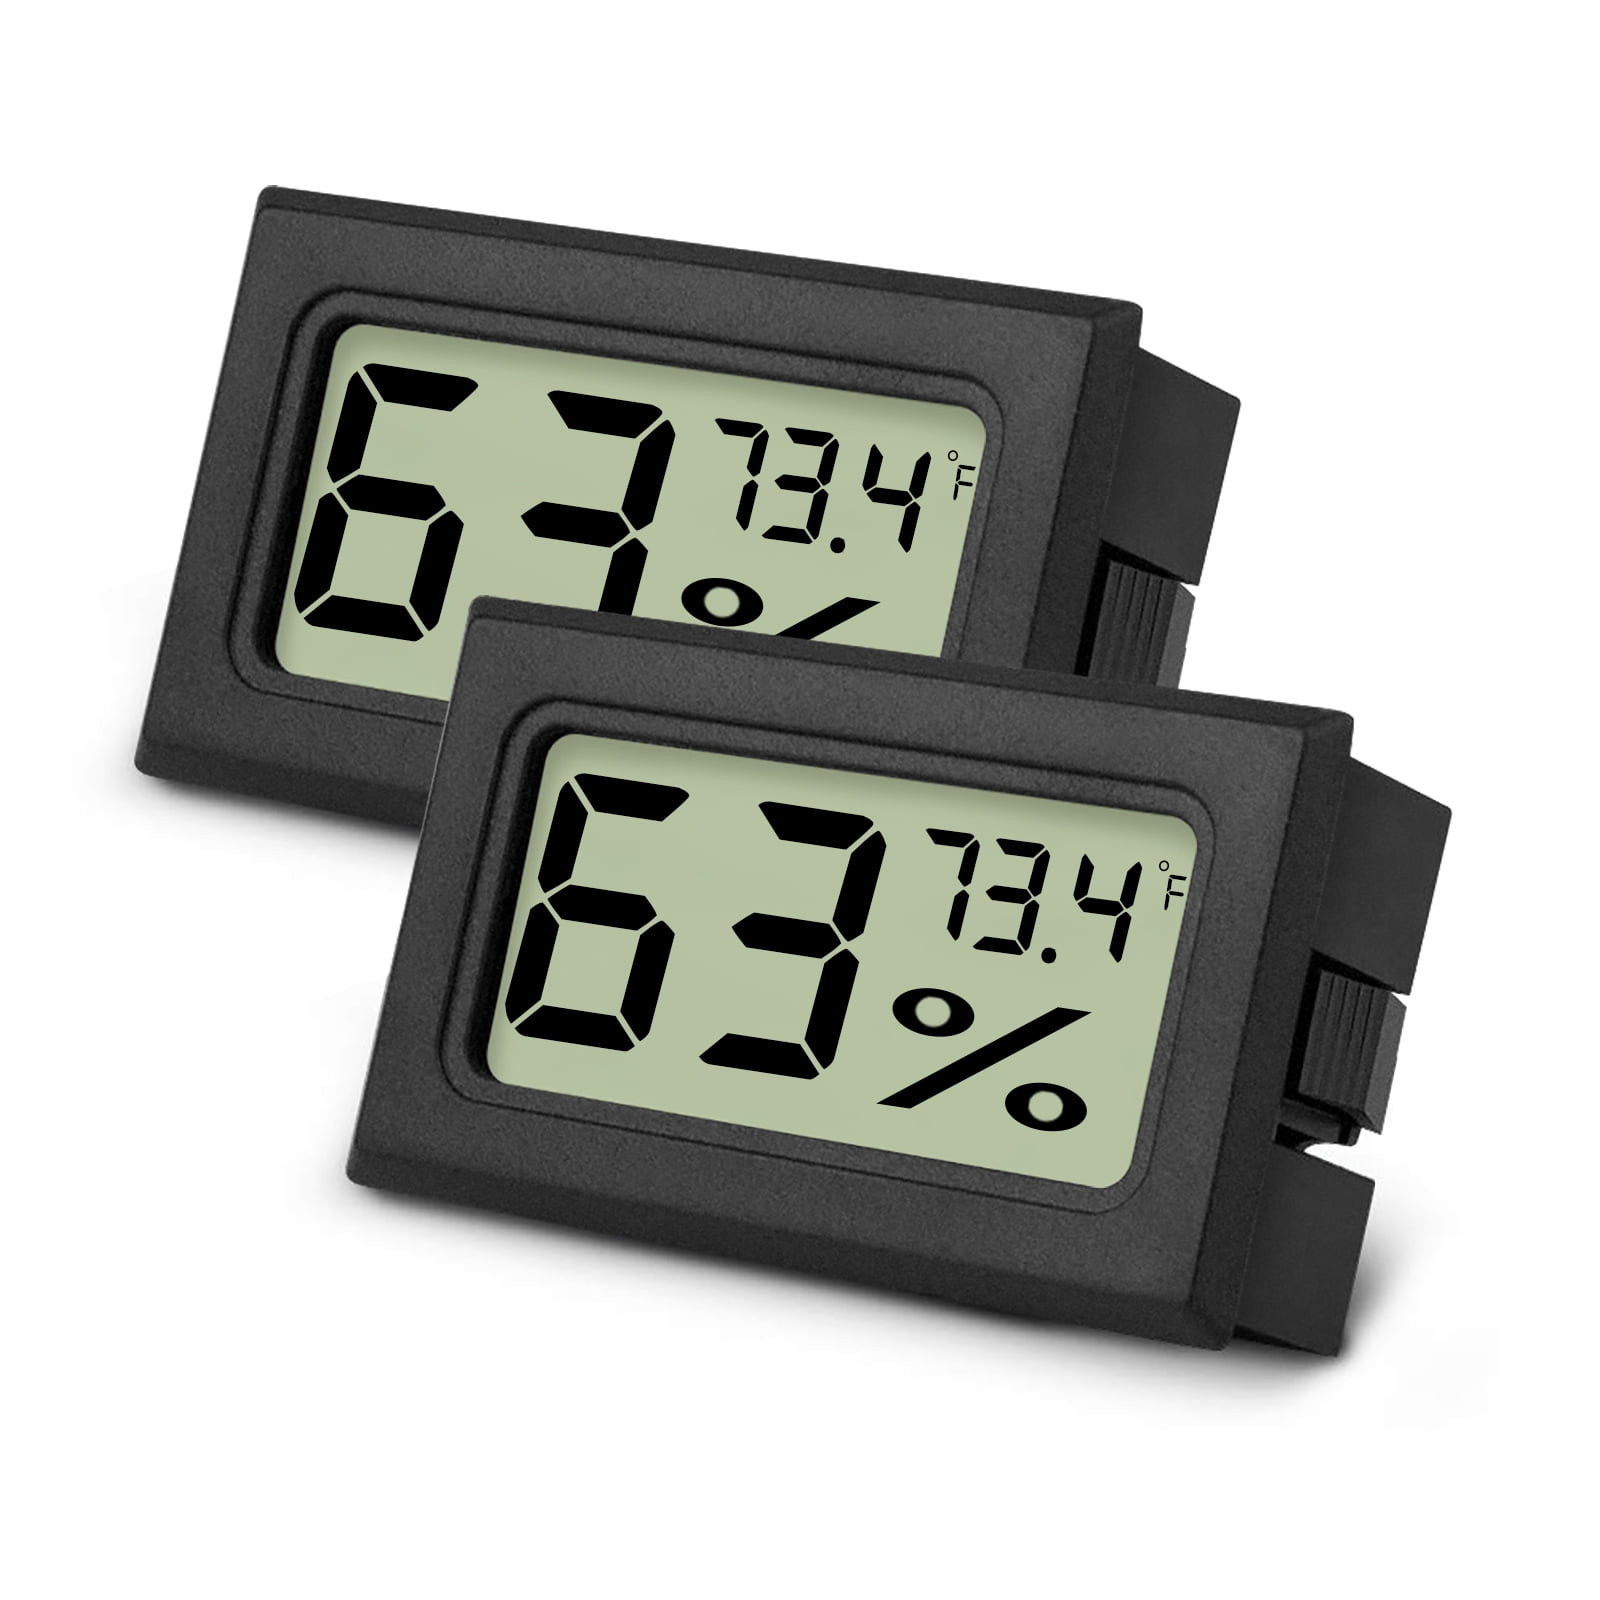 Reptile thermometer Mini Hygrometer/Temperature LCD Display Digital Fahrenheit Temperature Humidity Meter Gauge for Incubators Reptile/Humidors/Greenhouse/Garden/Cellar/Fridge/Closet and Many